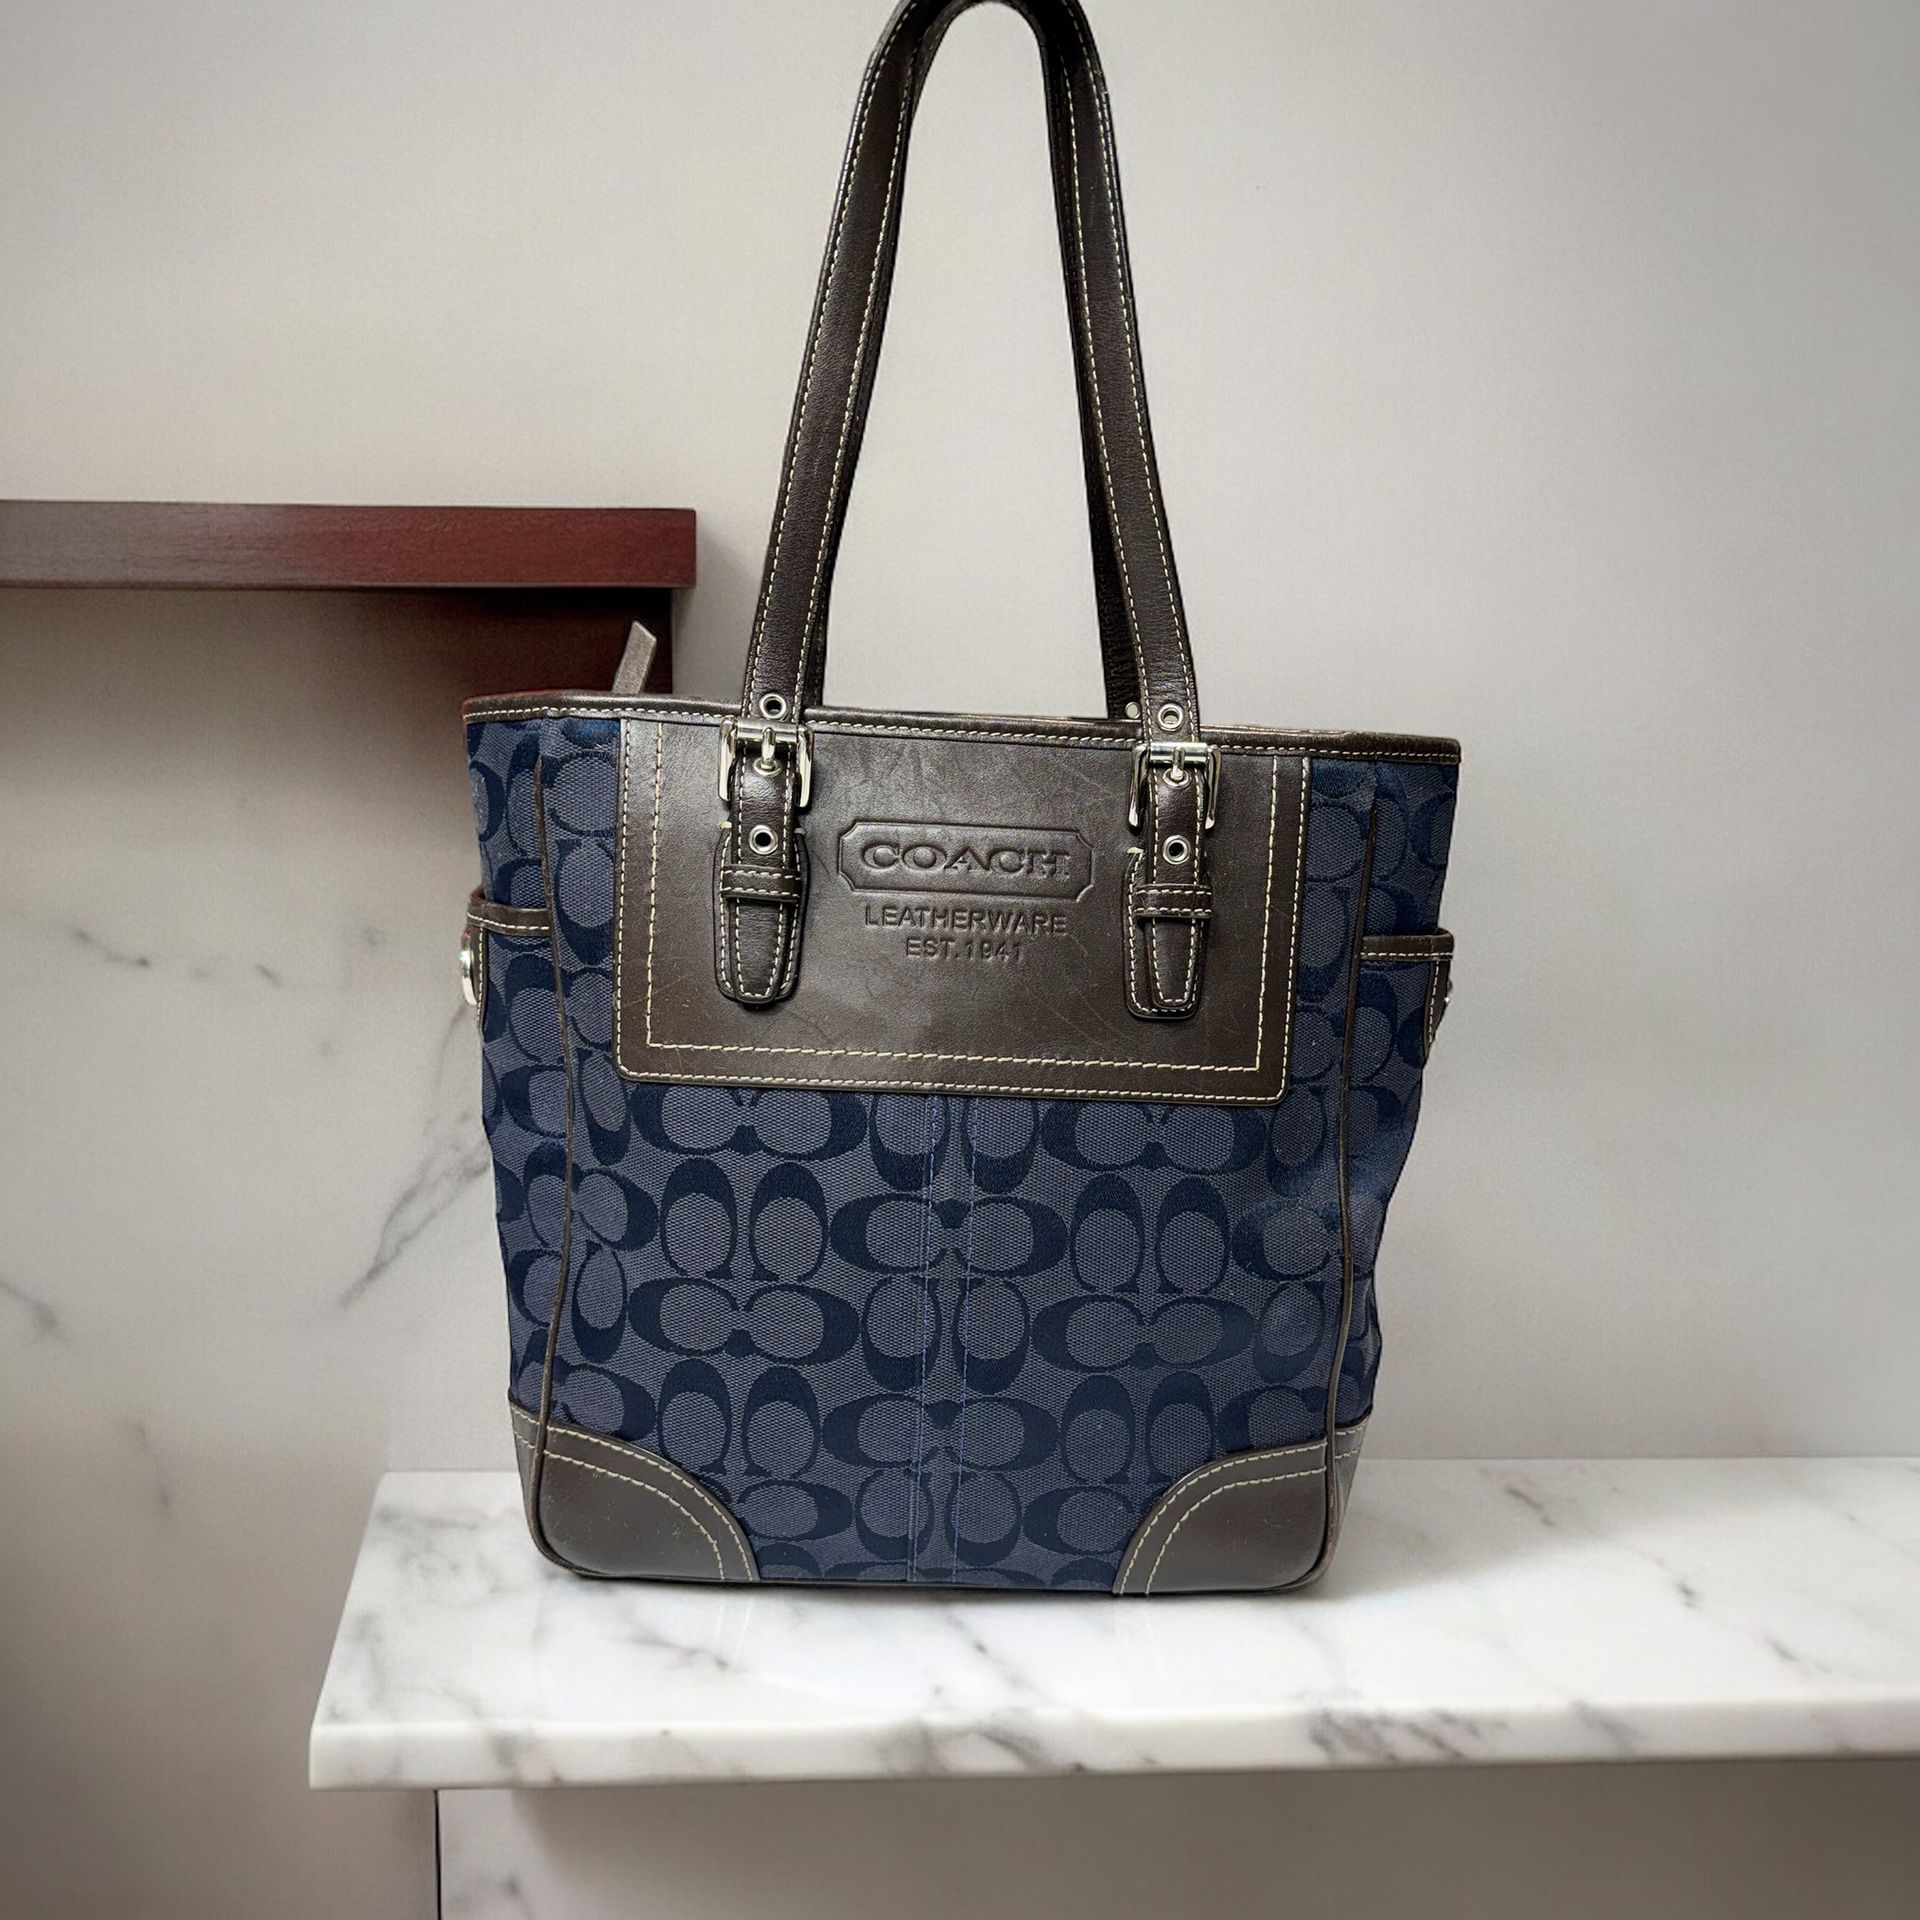 AUTHENTIC COACH SIGNATURE  TOTE Blue/Brown Handbag/Shoulder Bag